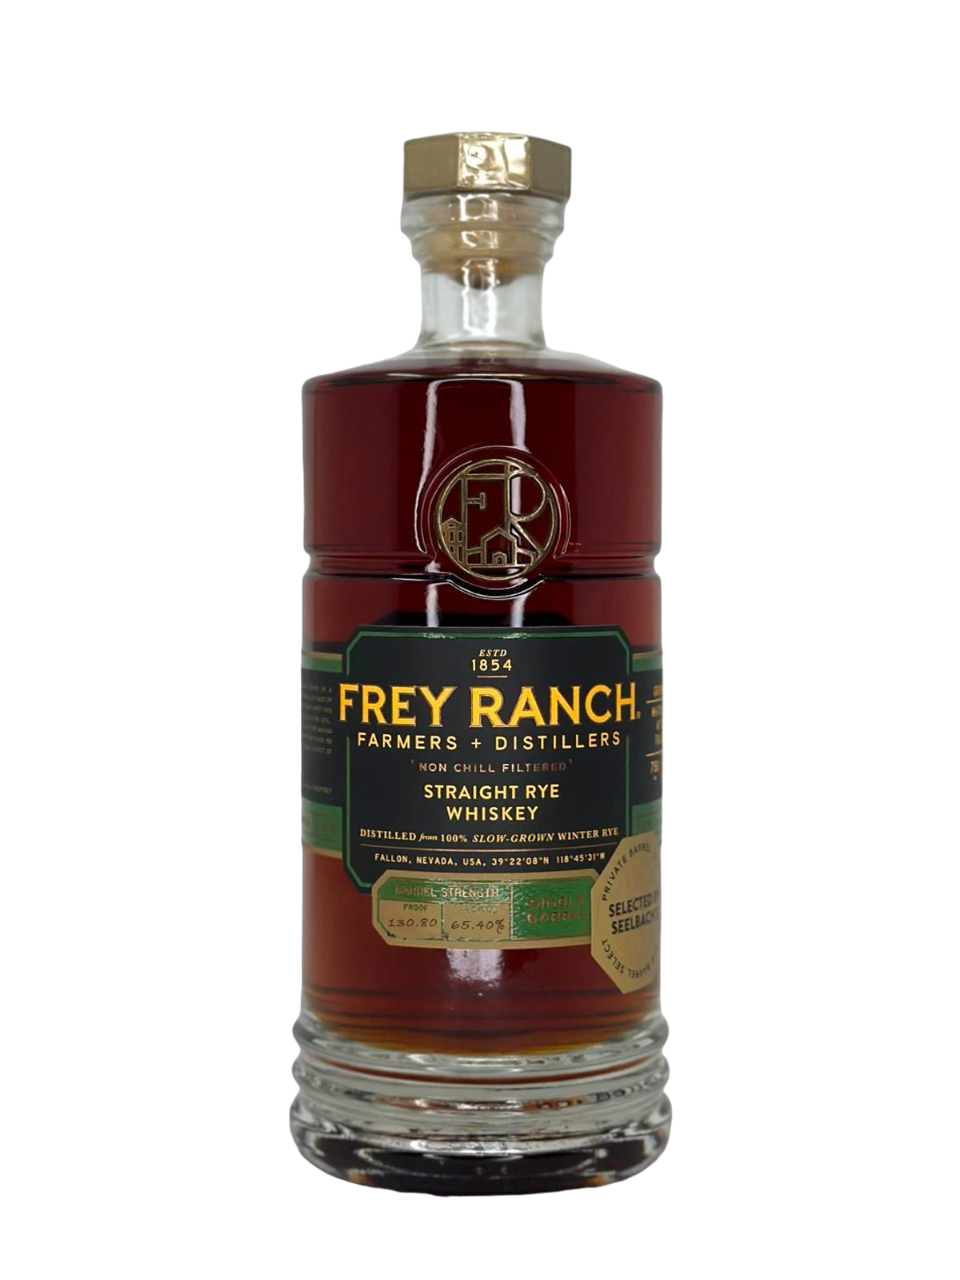 Frey Ranch Single Barrel Rye Barrel 130.80 Proof #669 - Selected by Seelbach's